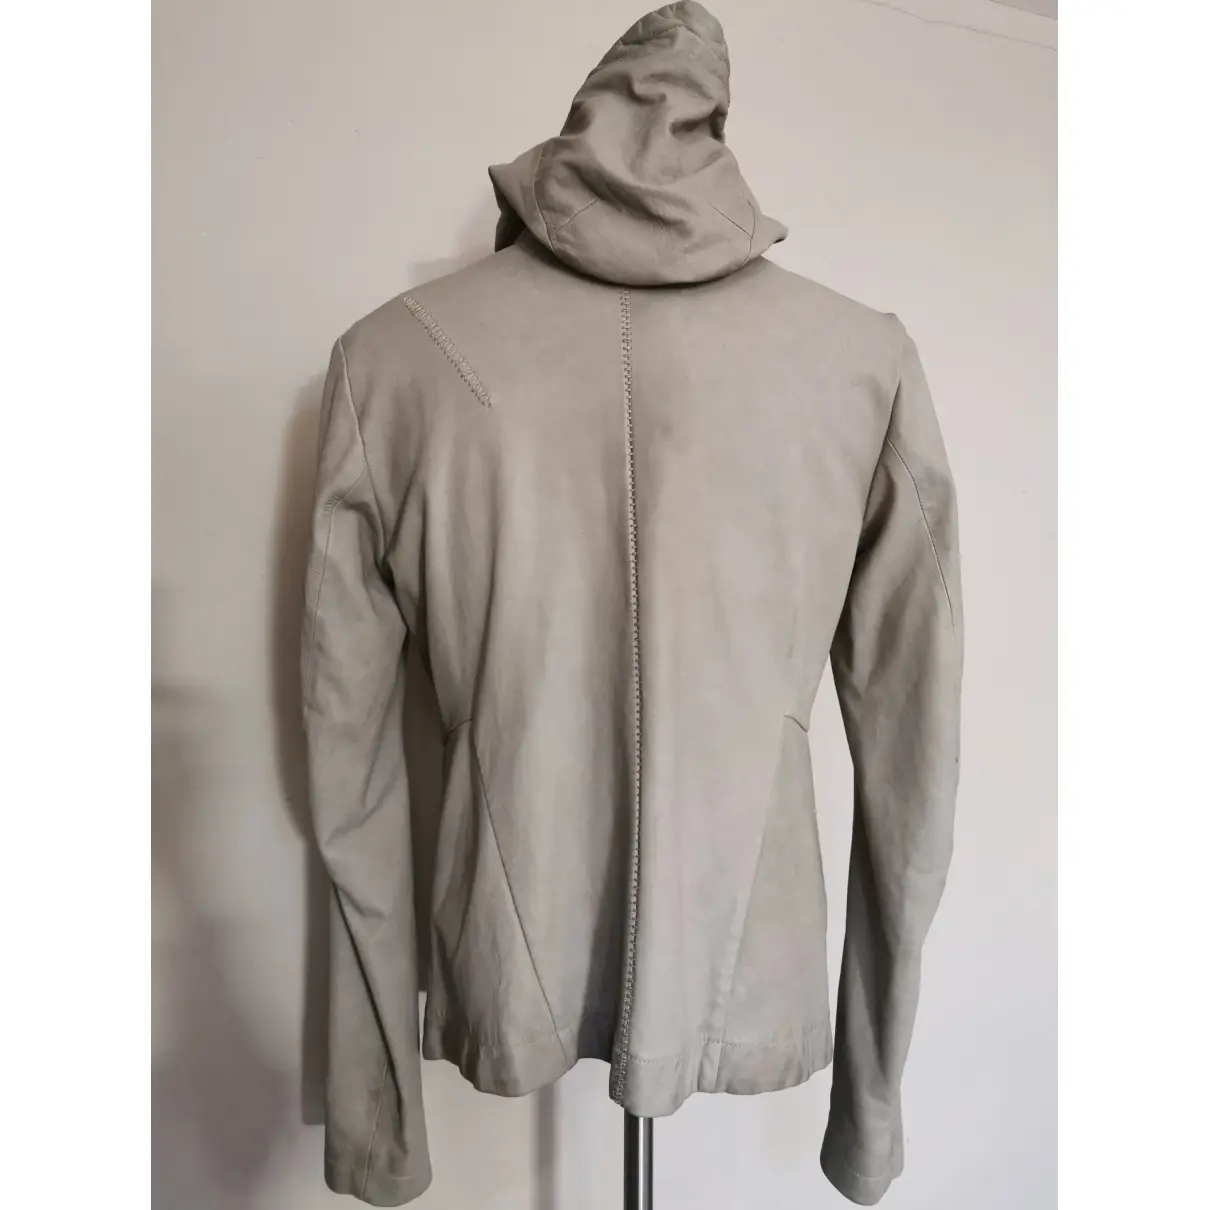 Buy 10Sei0Otto Leather jacket online